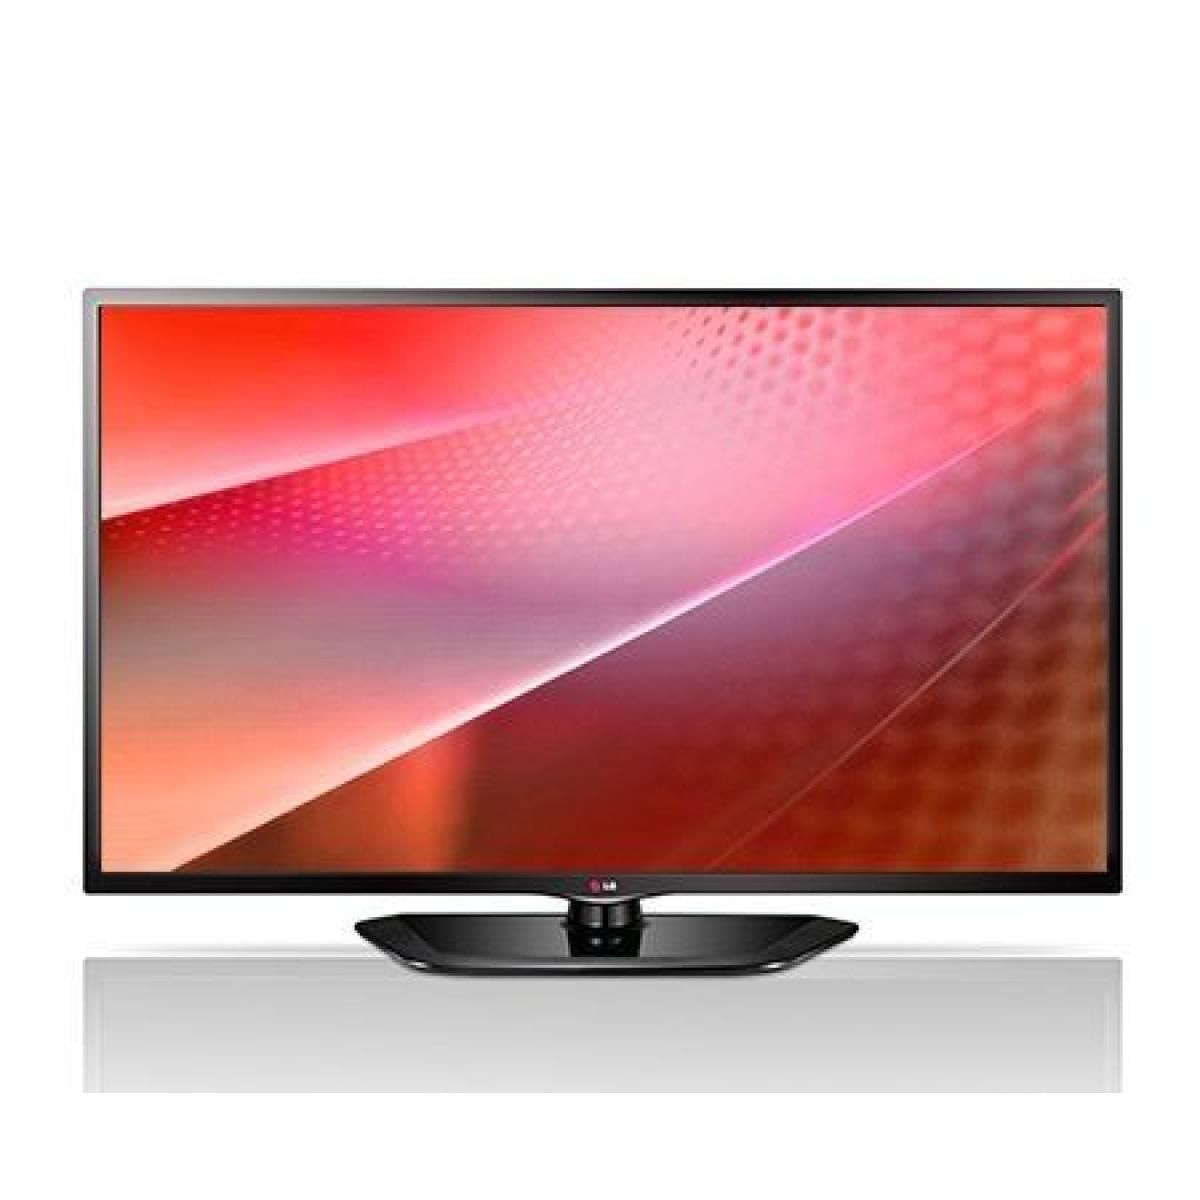 Телевизоры характеристики описание. LG 50pb560u. Телевизор LG 39ln540v. Телевизор LG 29ln450u. Телевизор LG 32ln541u.